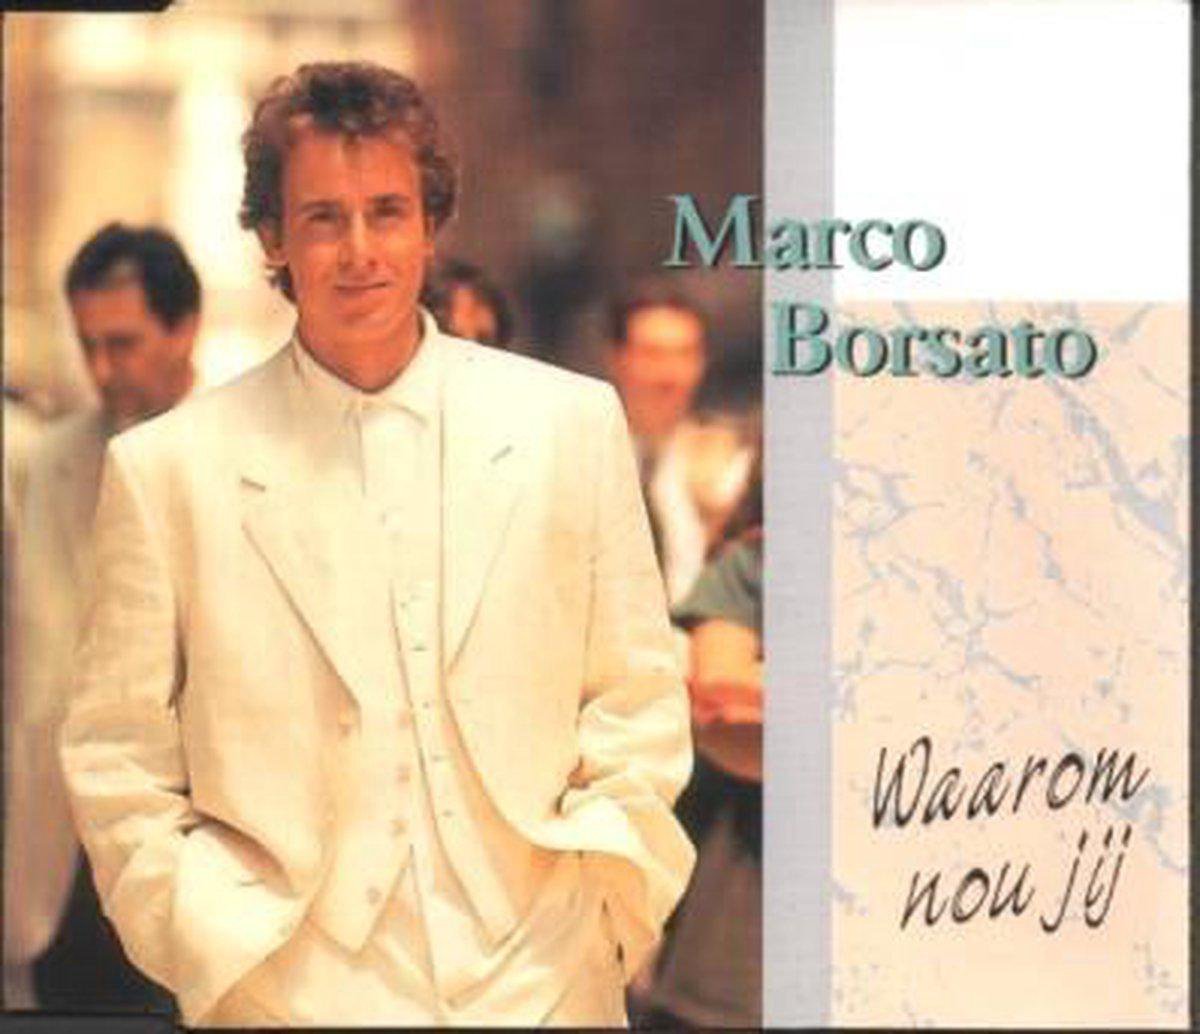 Marco borsato waarom nou jij cd-single, Marco Borsato | Muziek | bol.com